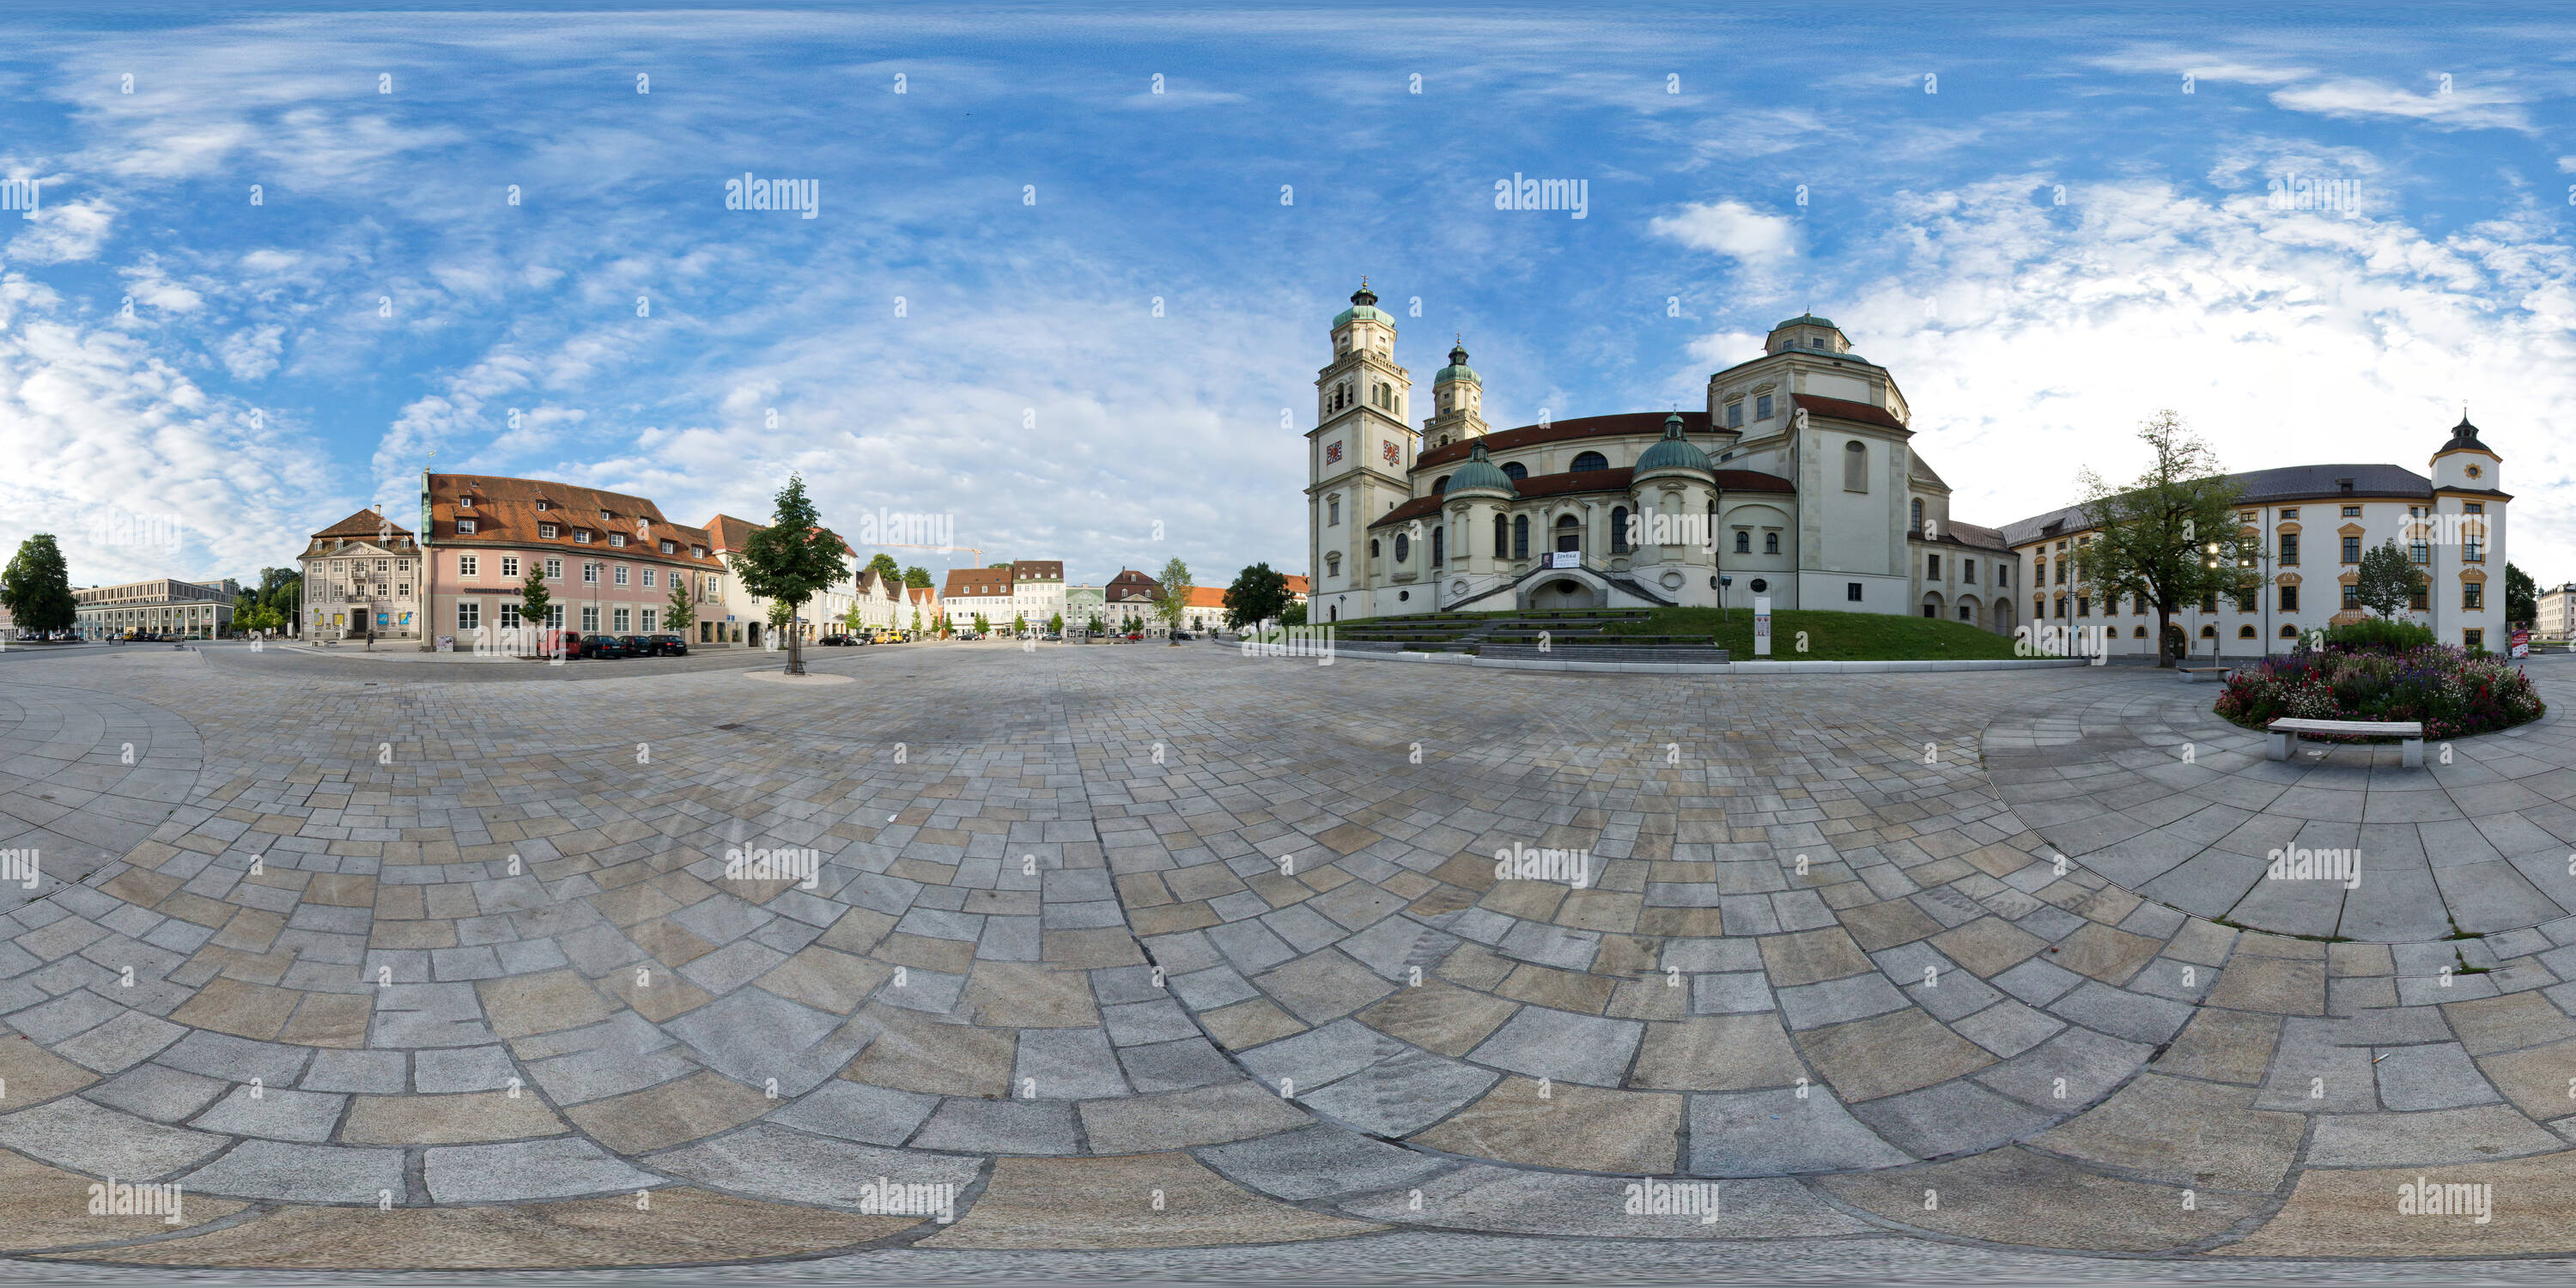 360 degree panoramic view of St Lorenz Basilica, Kempten, 2017-07